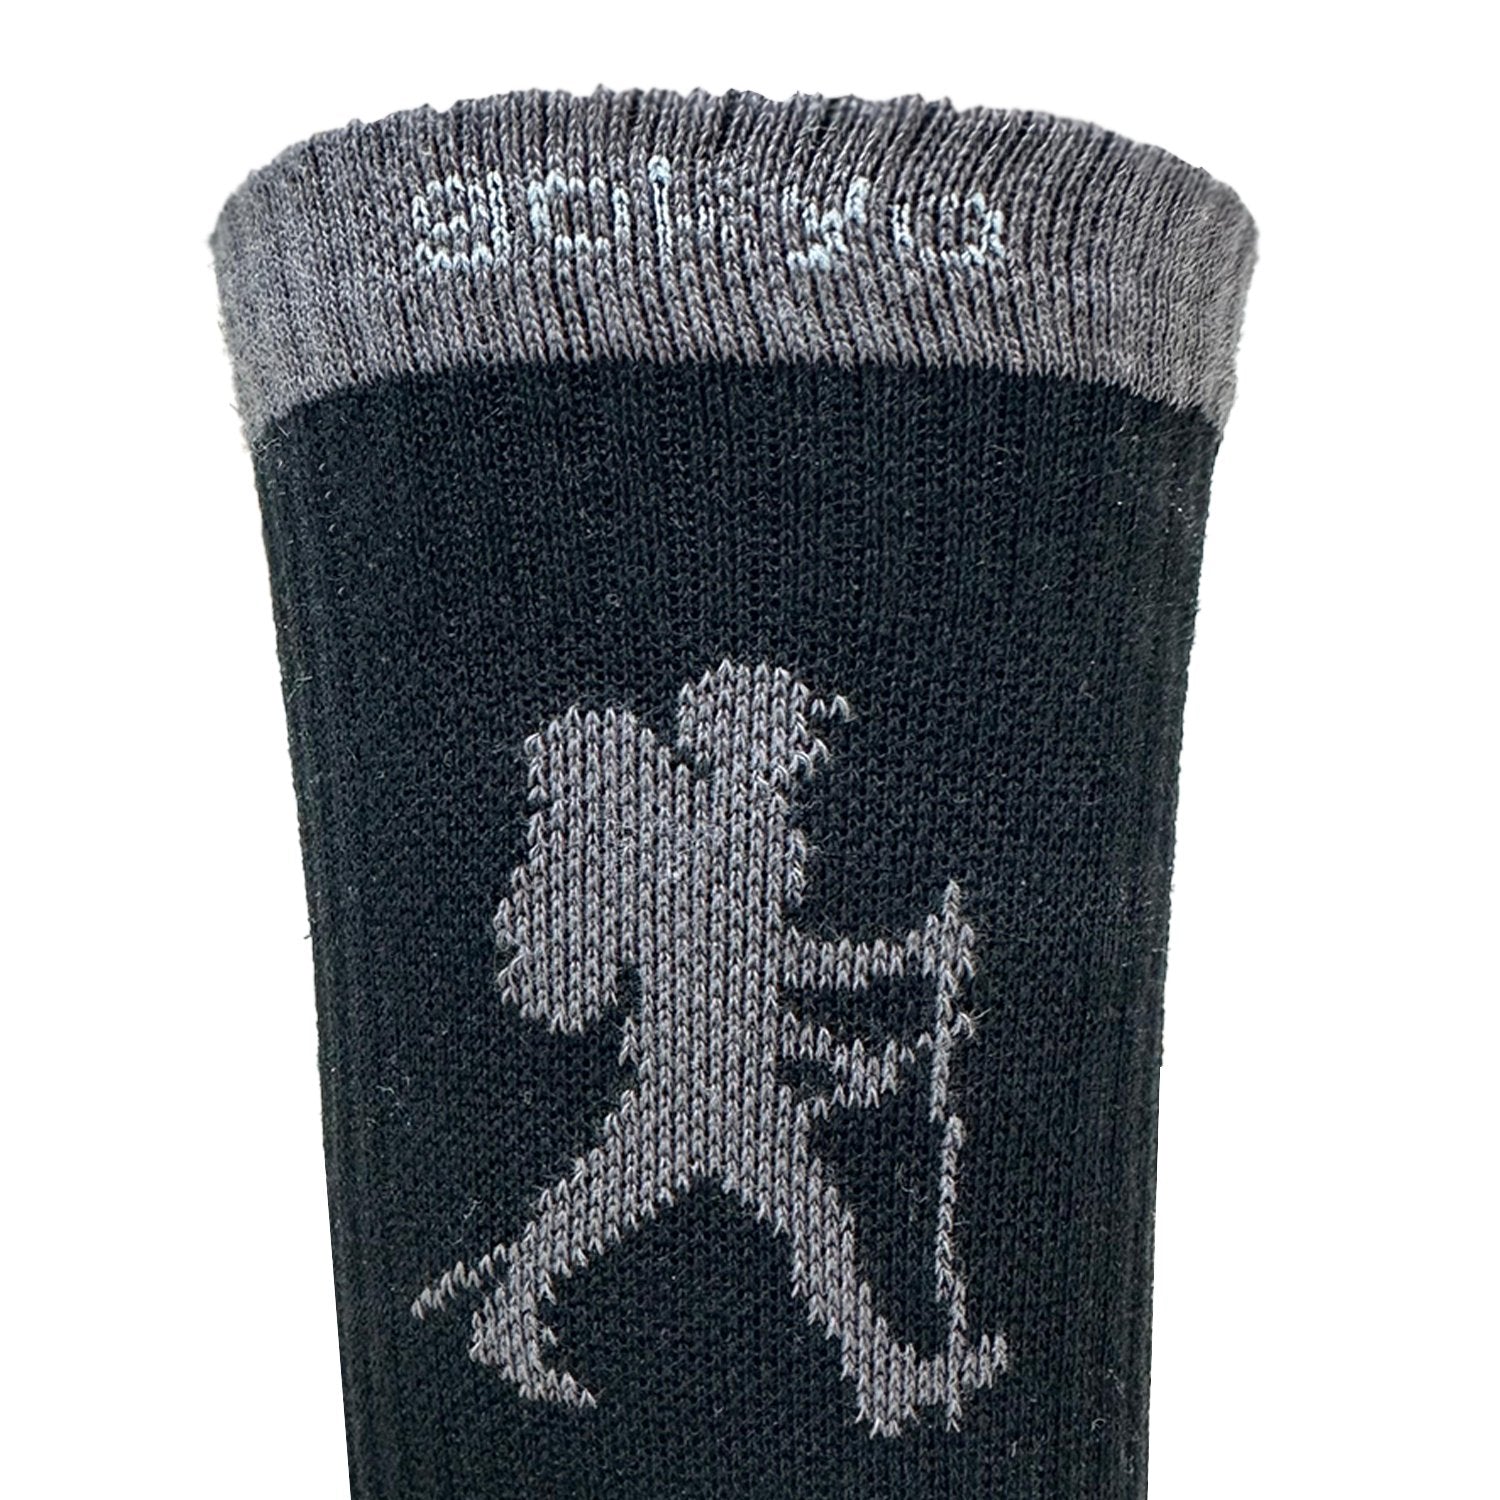 Buy Gokyo Kaza Trekking Socks | Trekking Socks at Gokyo Outdoor Clothing & Gear